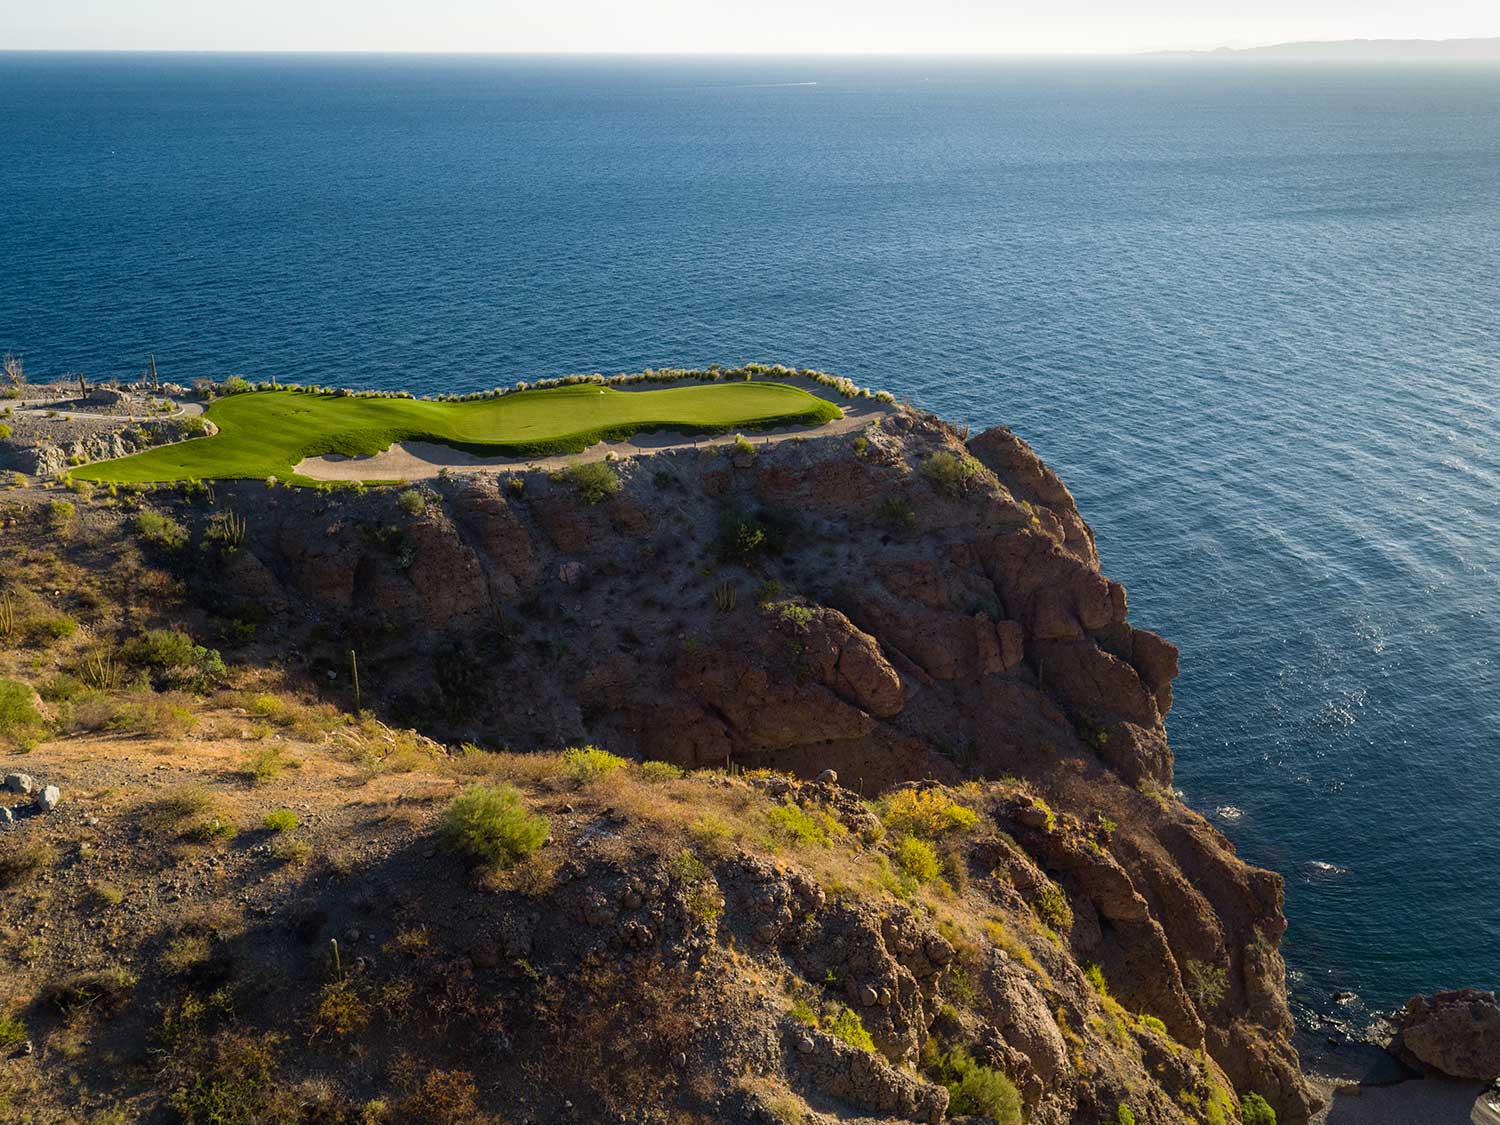 A golf course overlooking the ocean on a hillside.